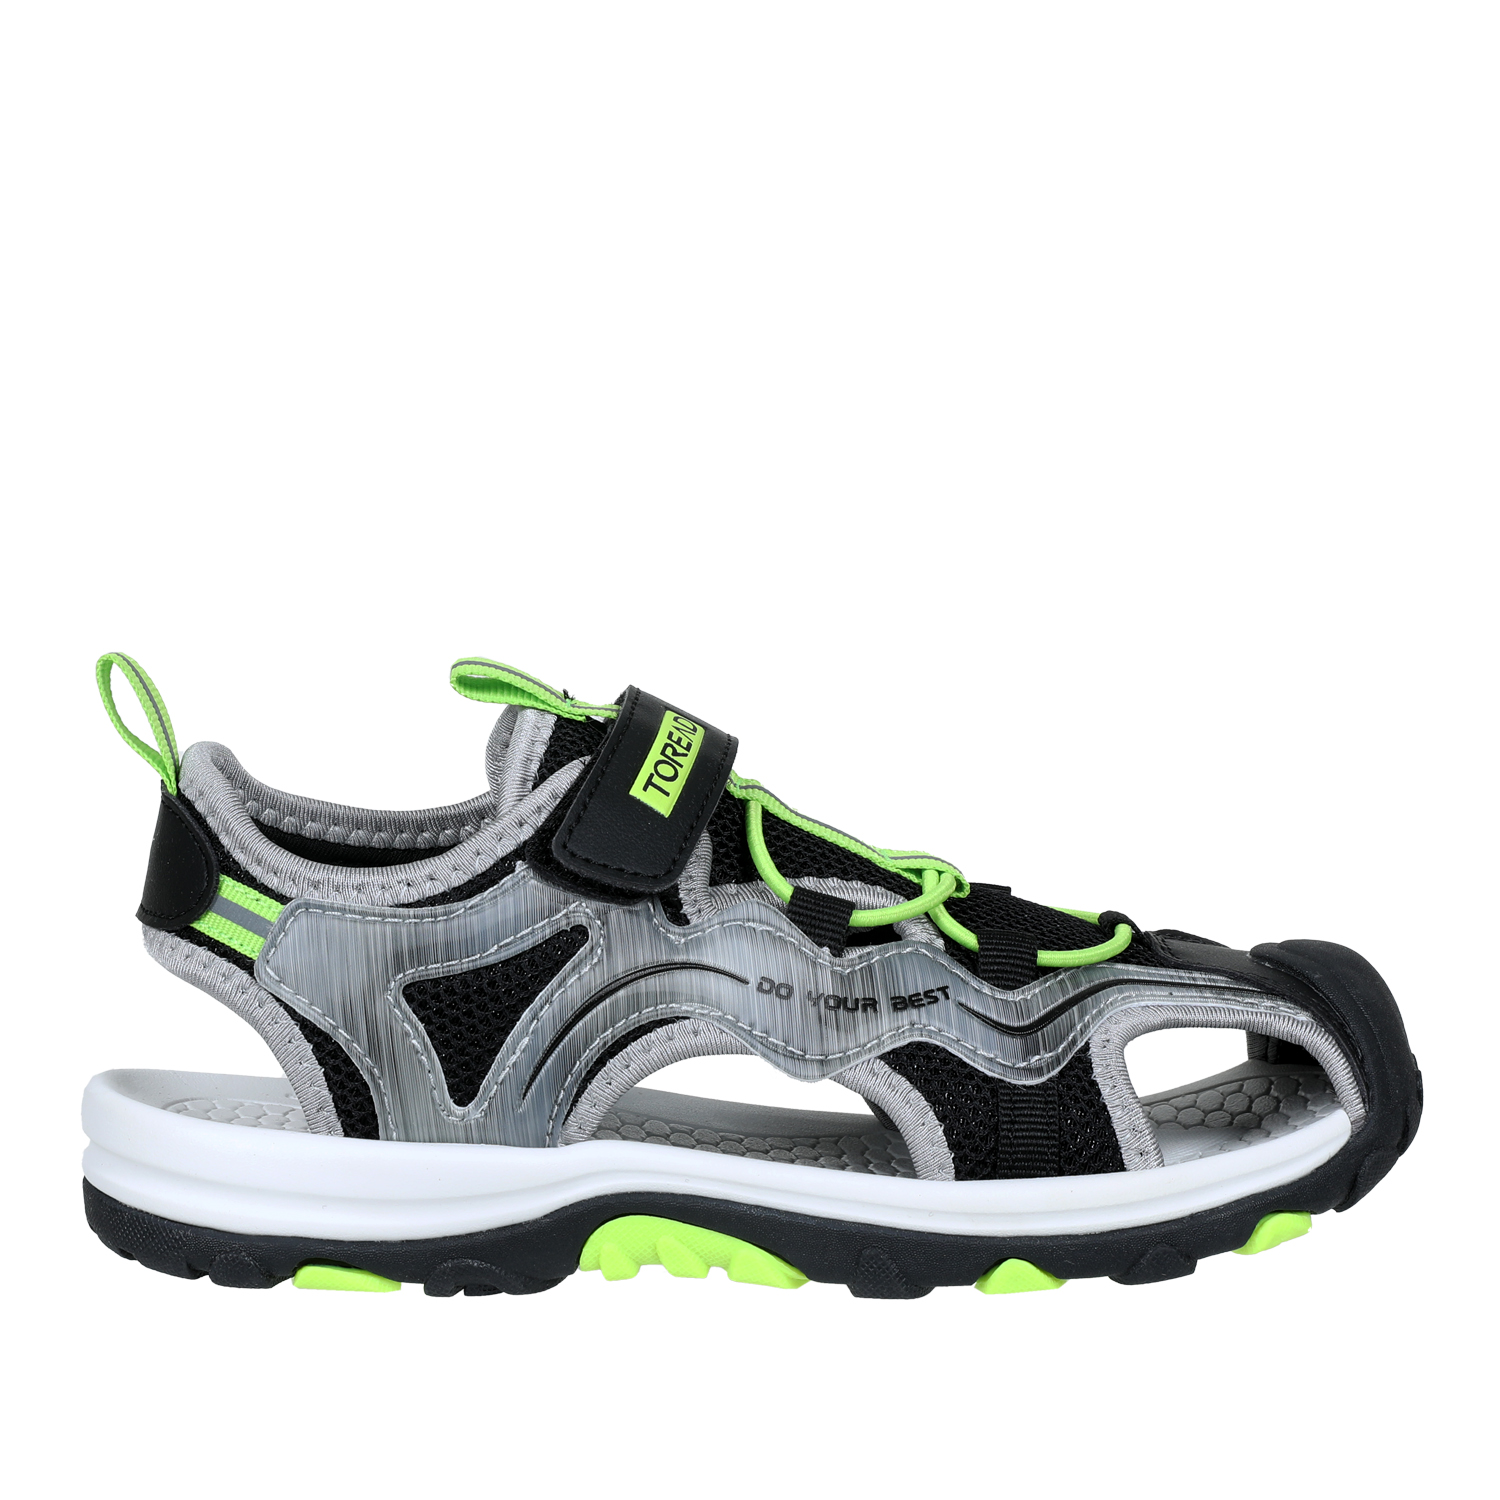 Сандалии детские Toread Children's sandals Black/Green